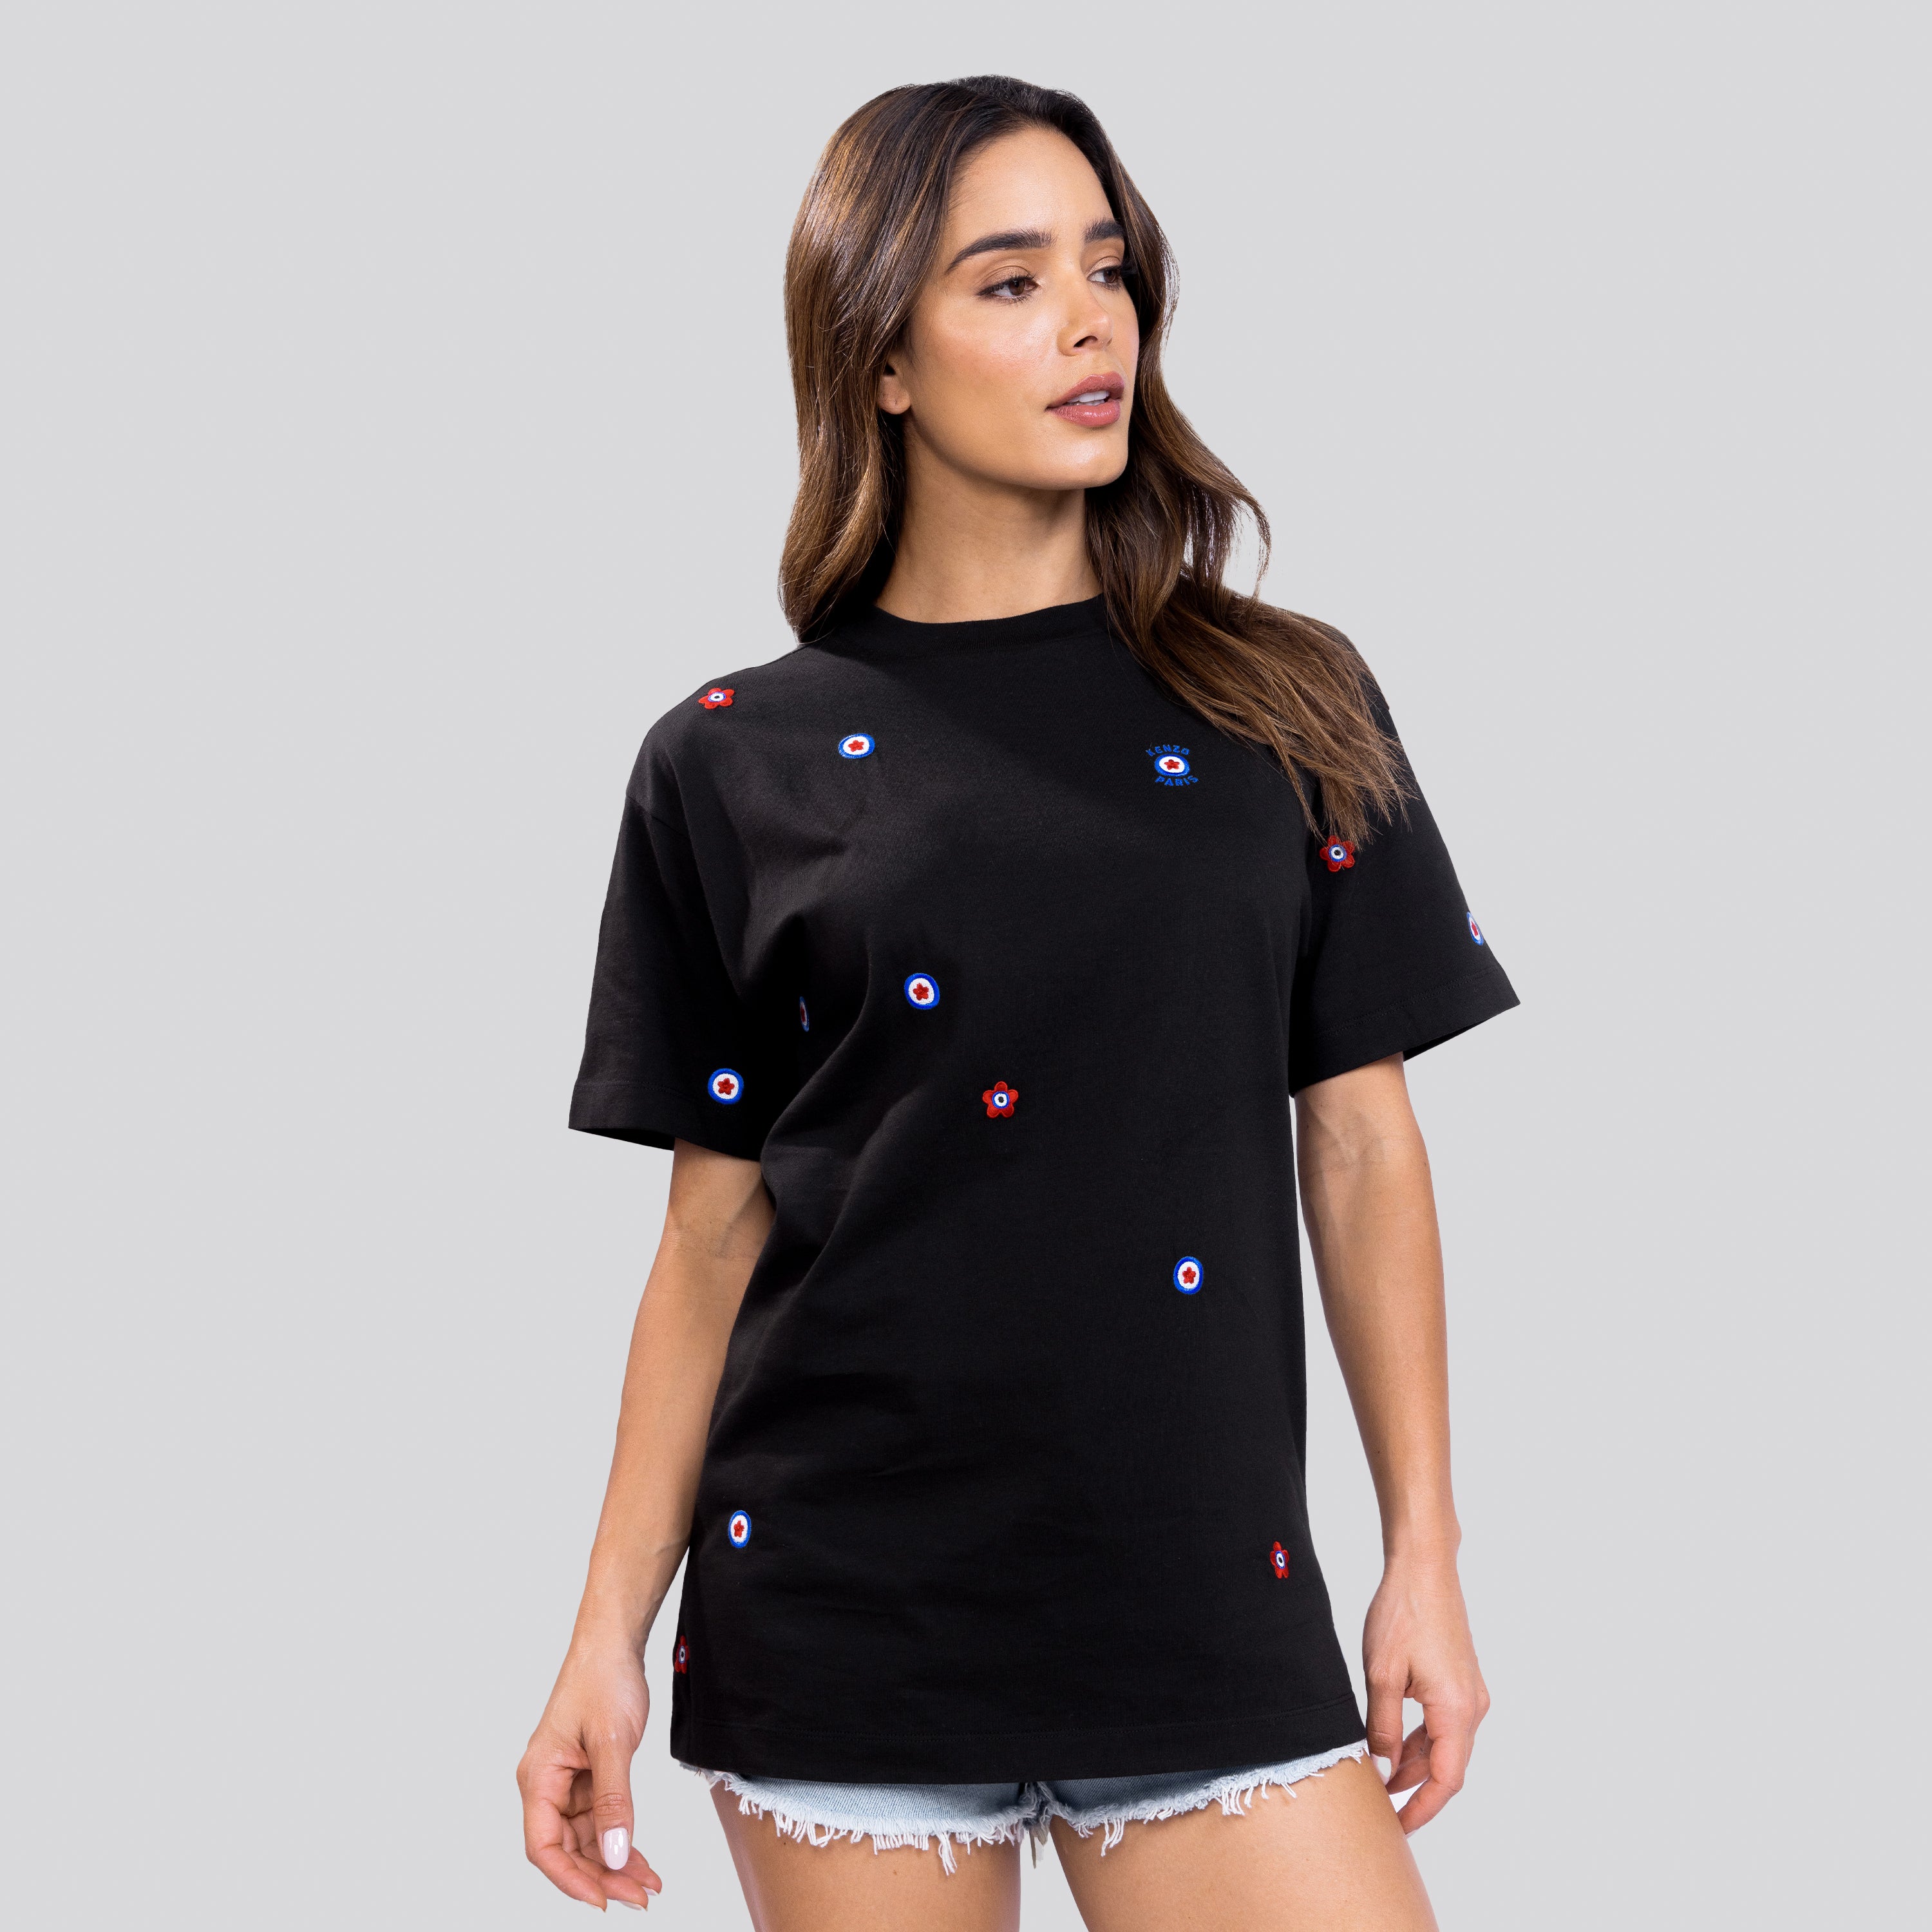 Camiseta Negro KENZO Targets